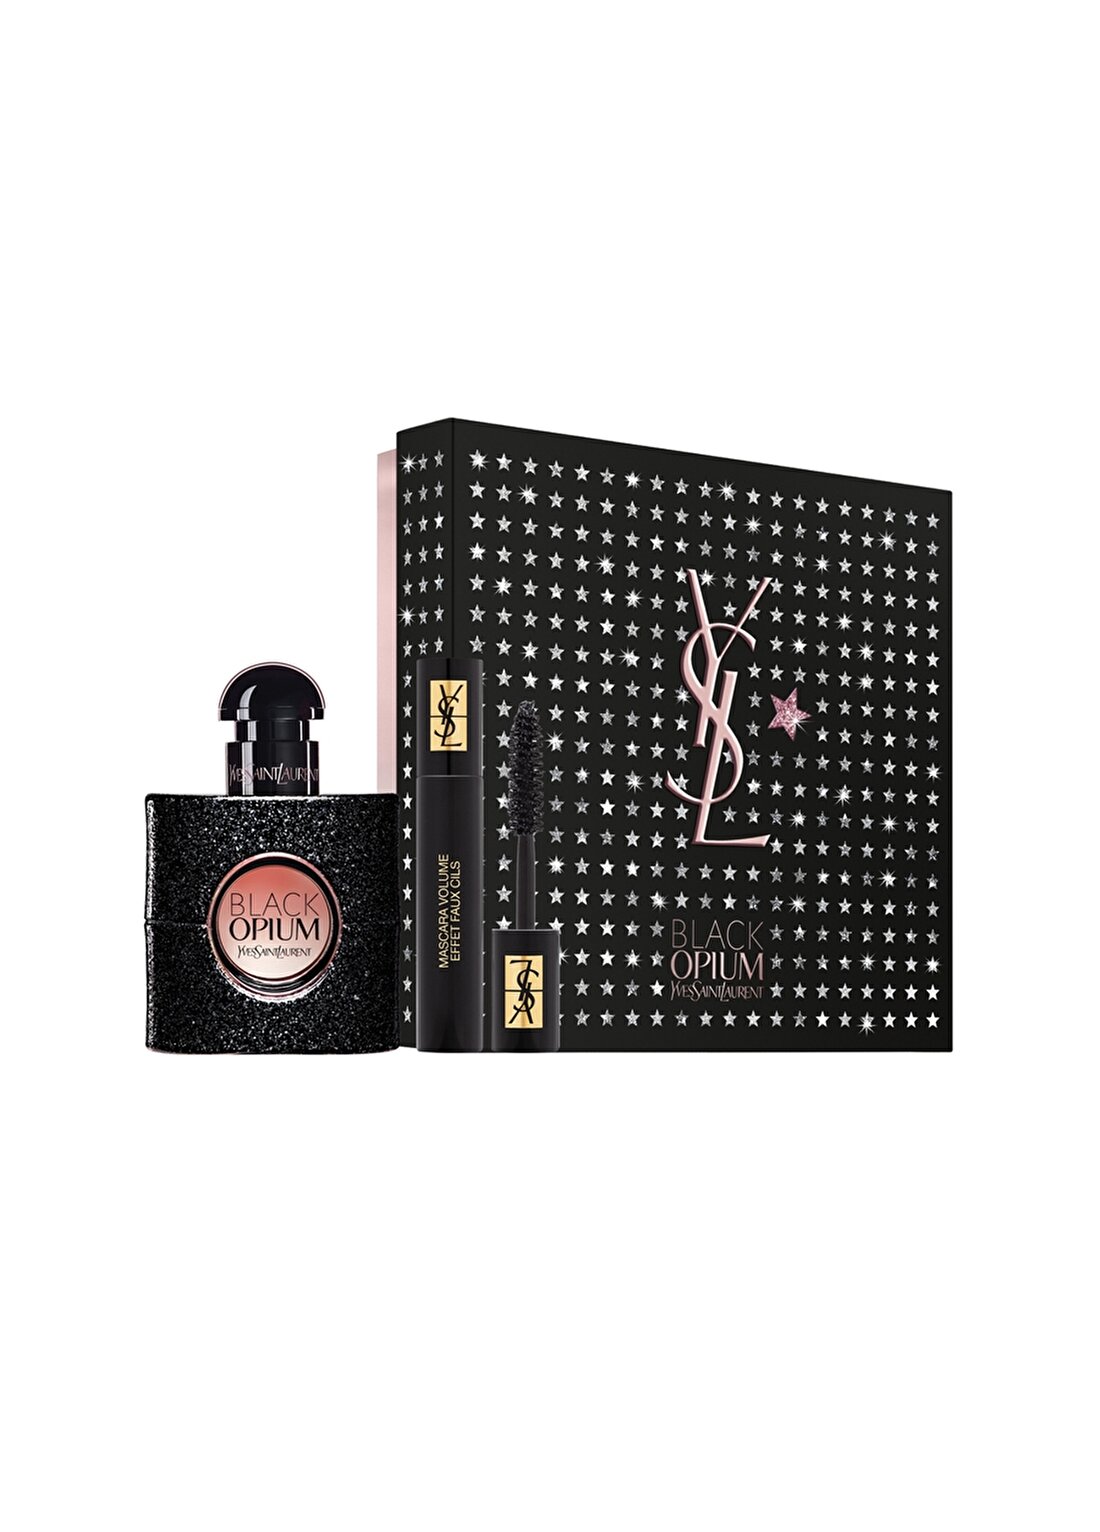 Yves Saint Laurent Black Opium Edp 30 Ml Kadın Parfüm Set